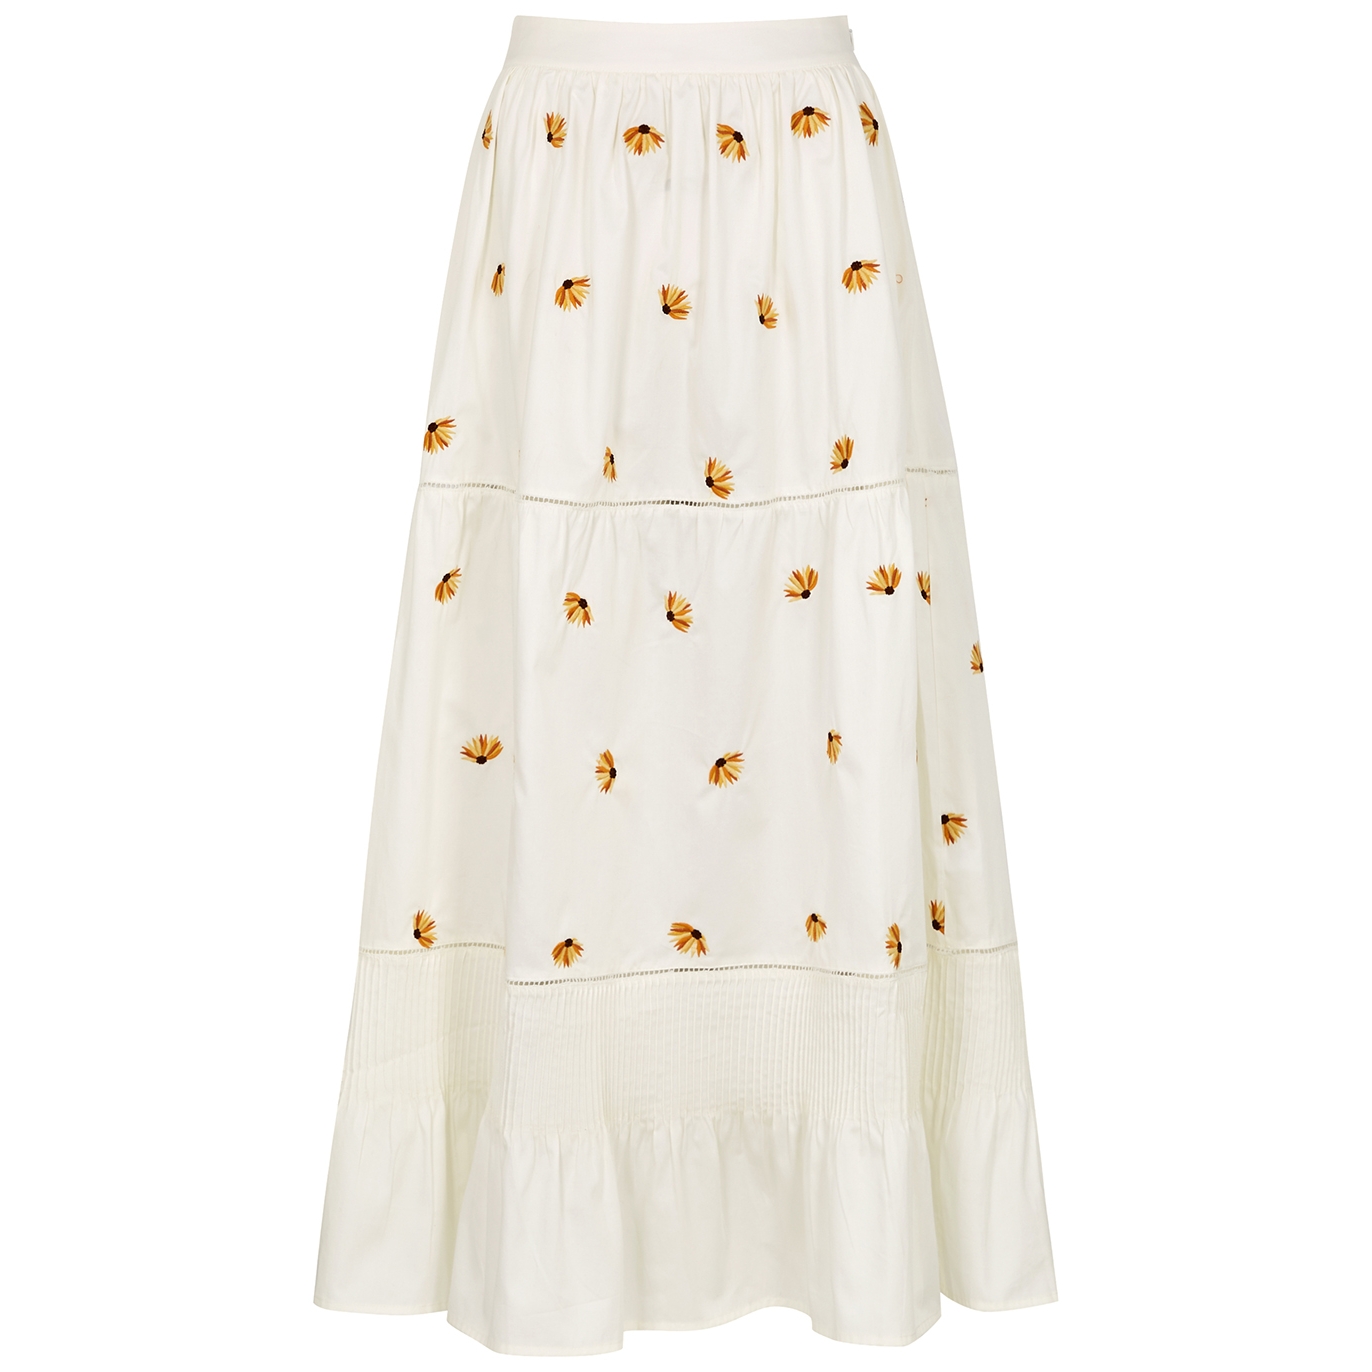 Lug Von Siga Ornella White Embroidered Cotton Skirt - Off White - 10